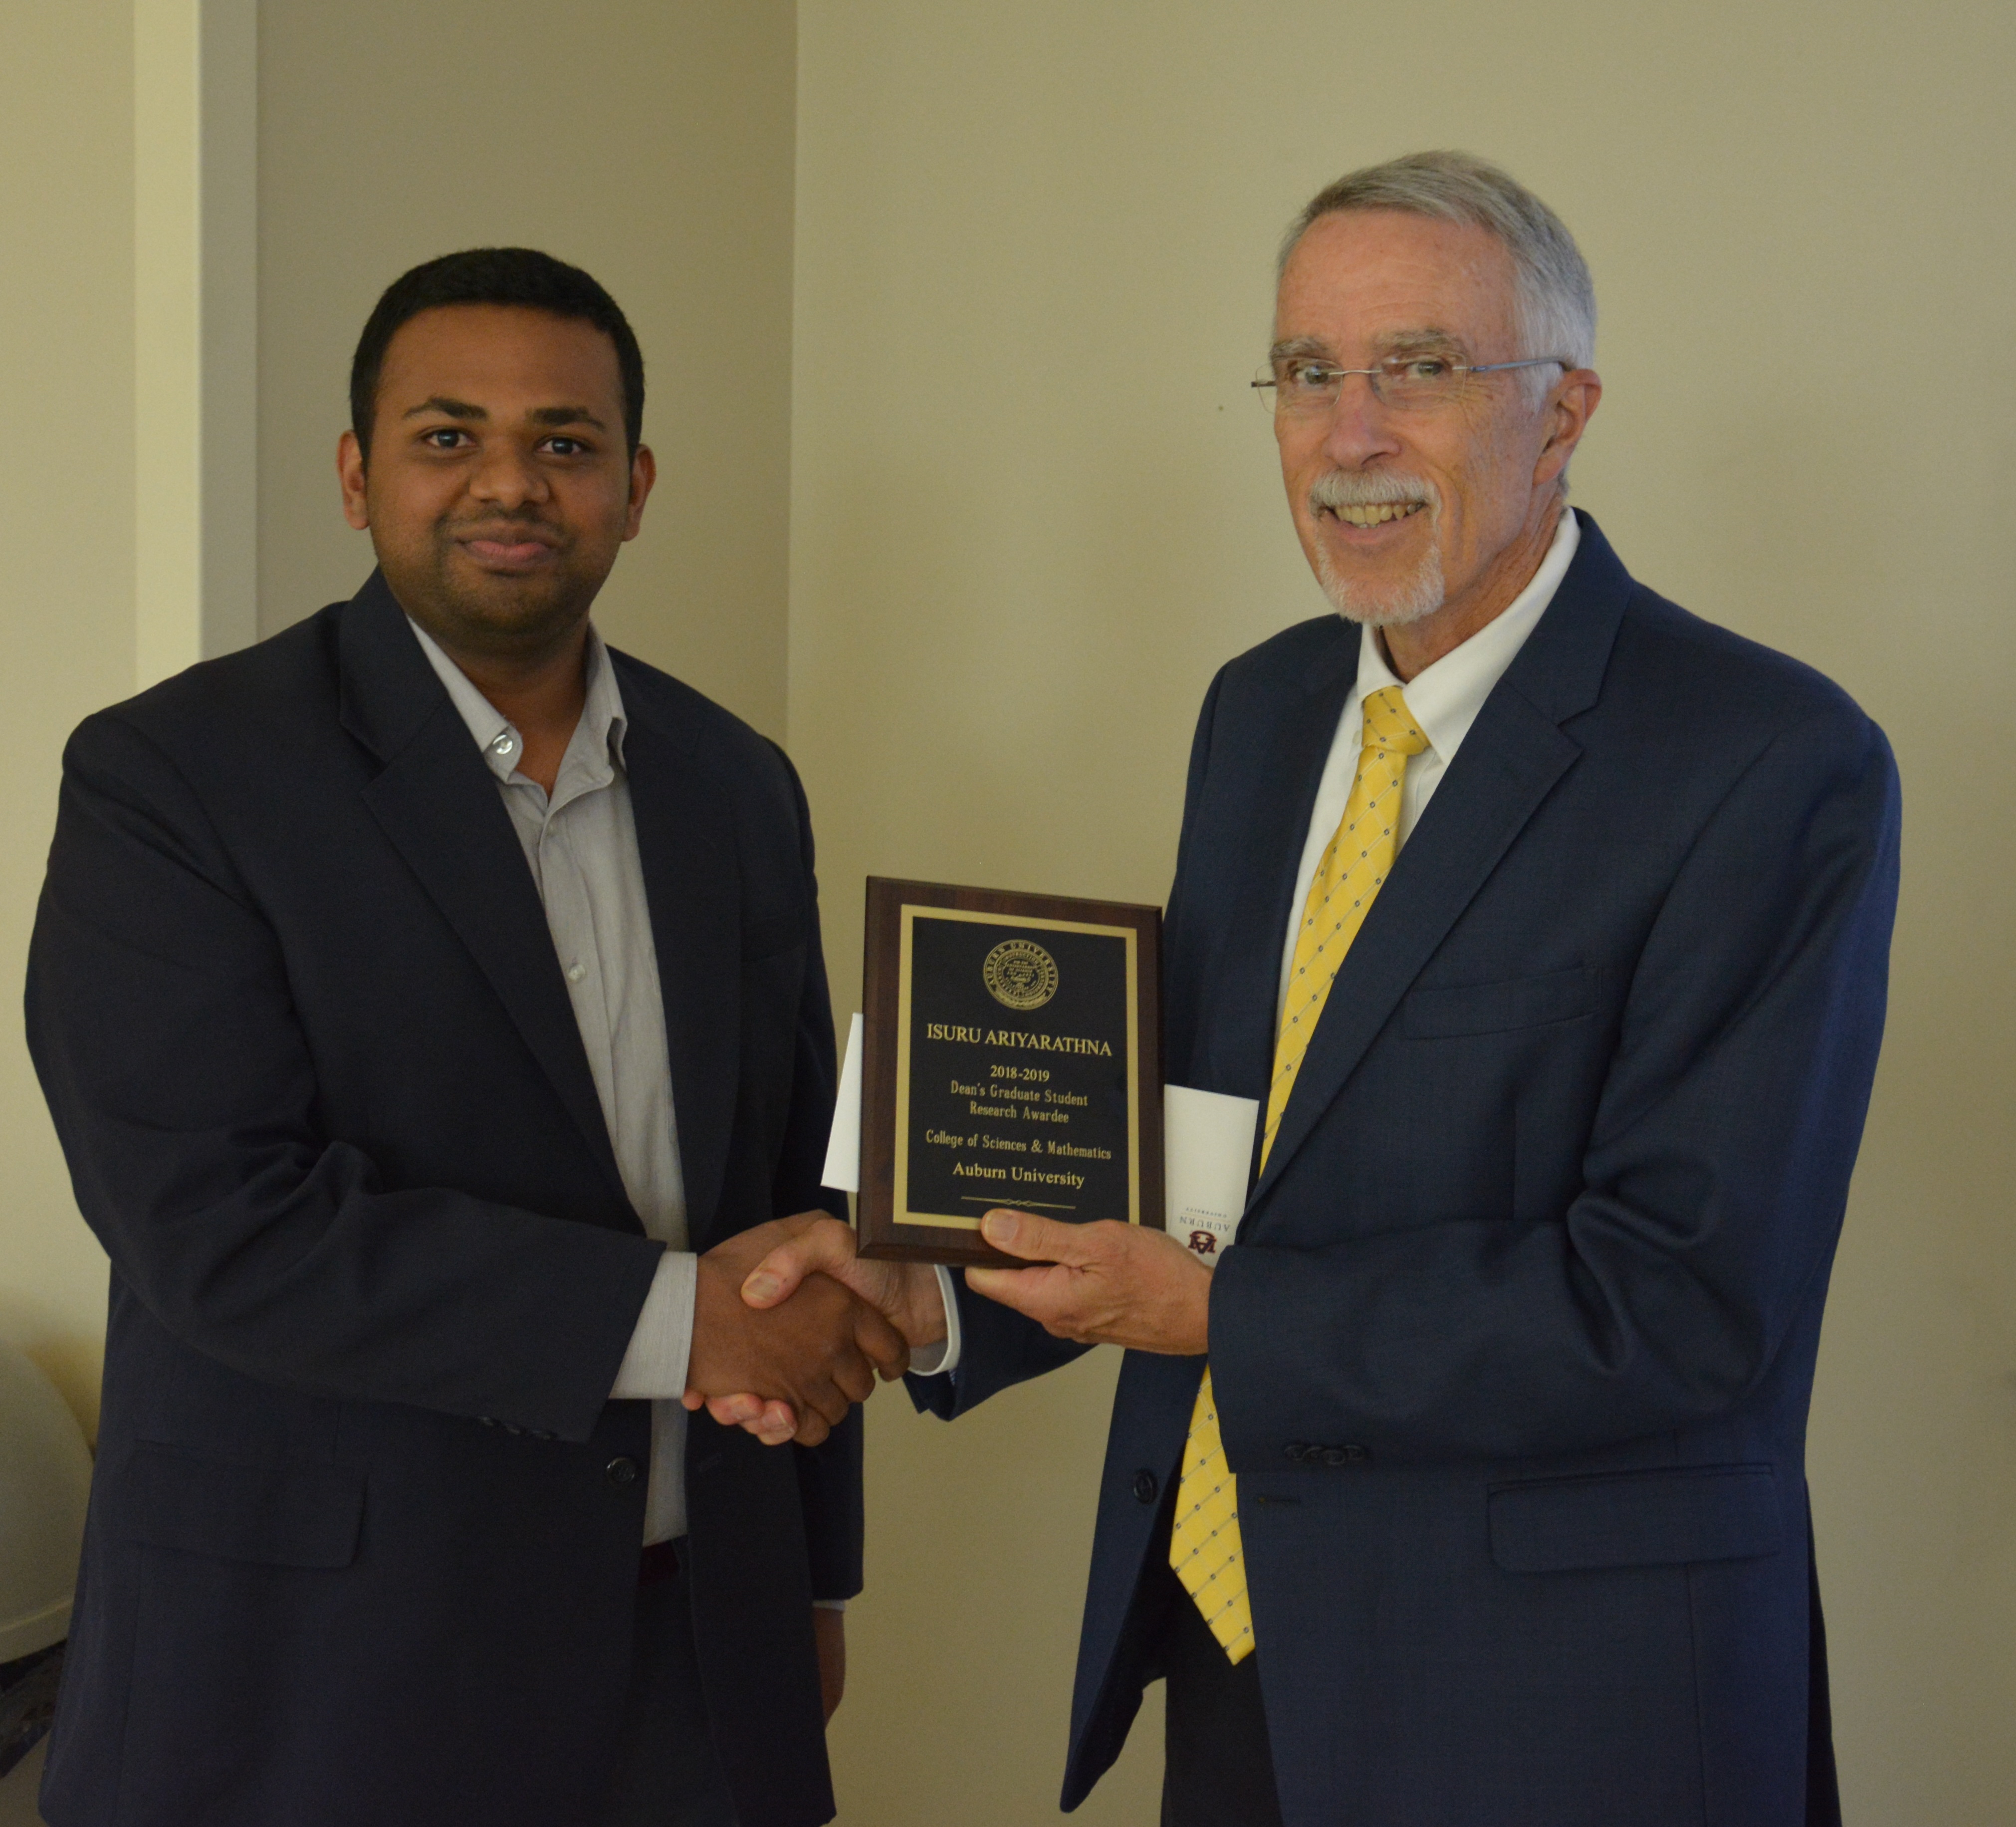 Doctoral student Isuru Ariyarathna accepting a Graduate Student Award from Dean Giordano.